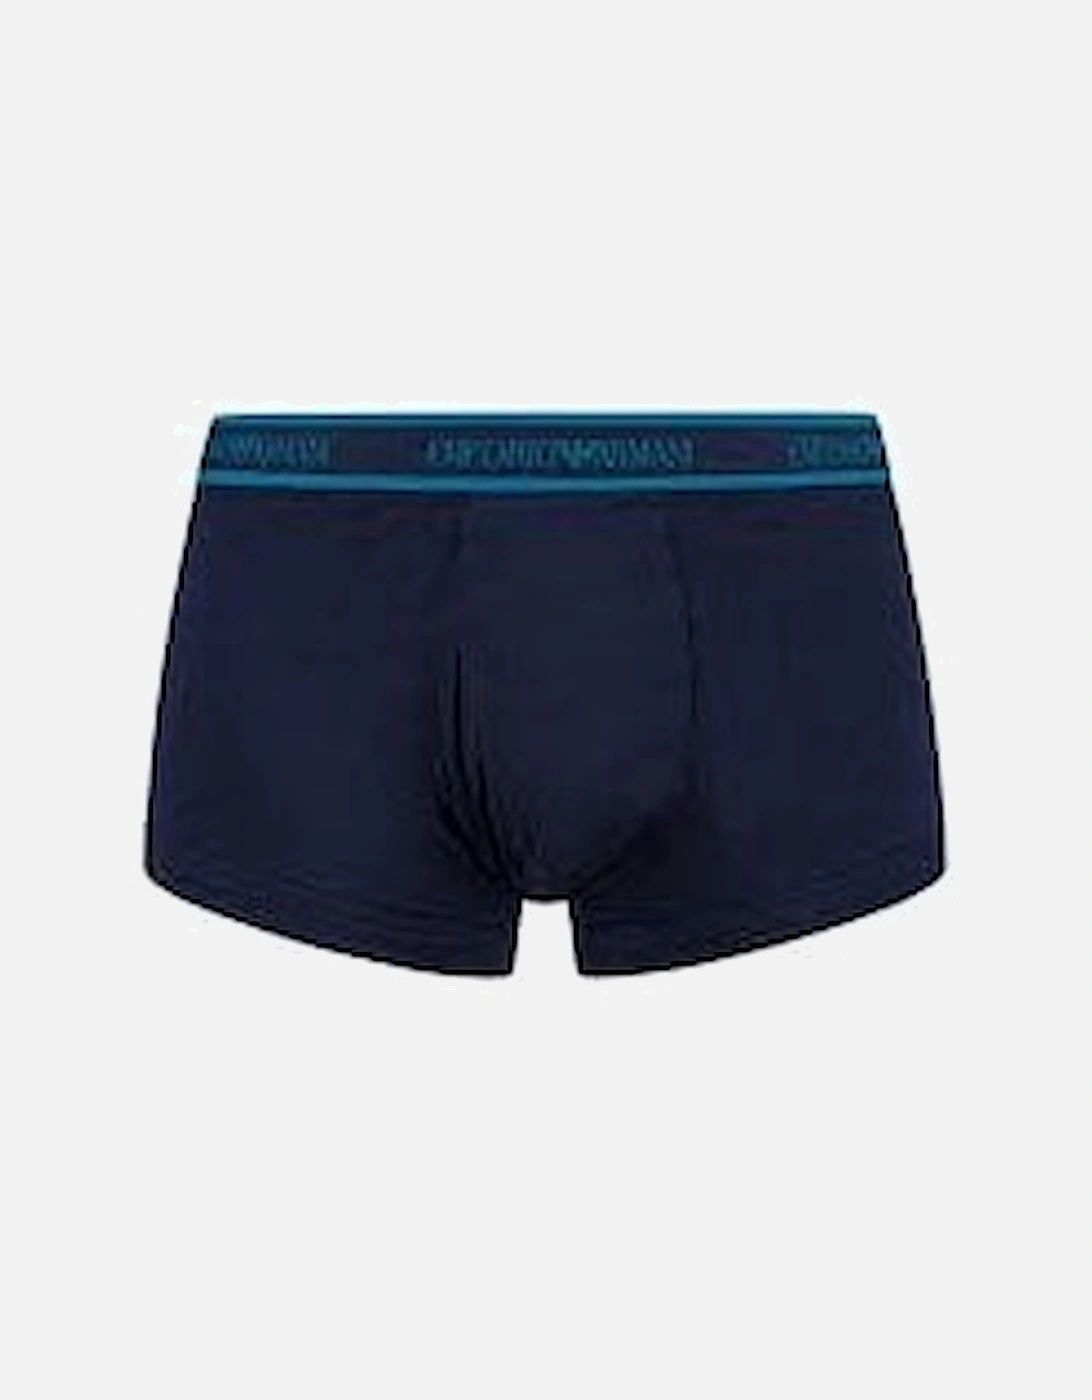 Cotton Navy/Turquoise Trunks Boxer